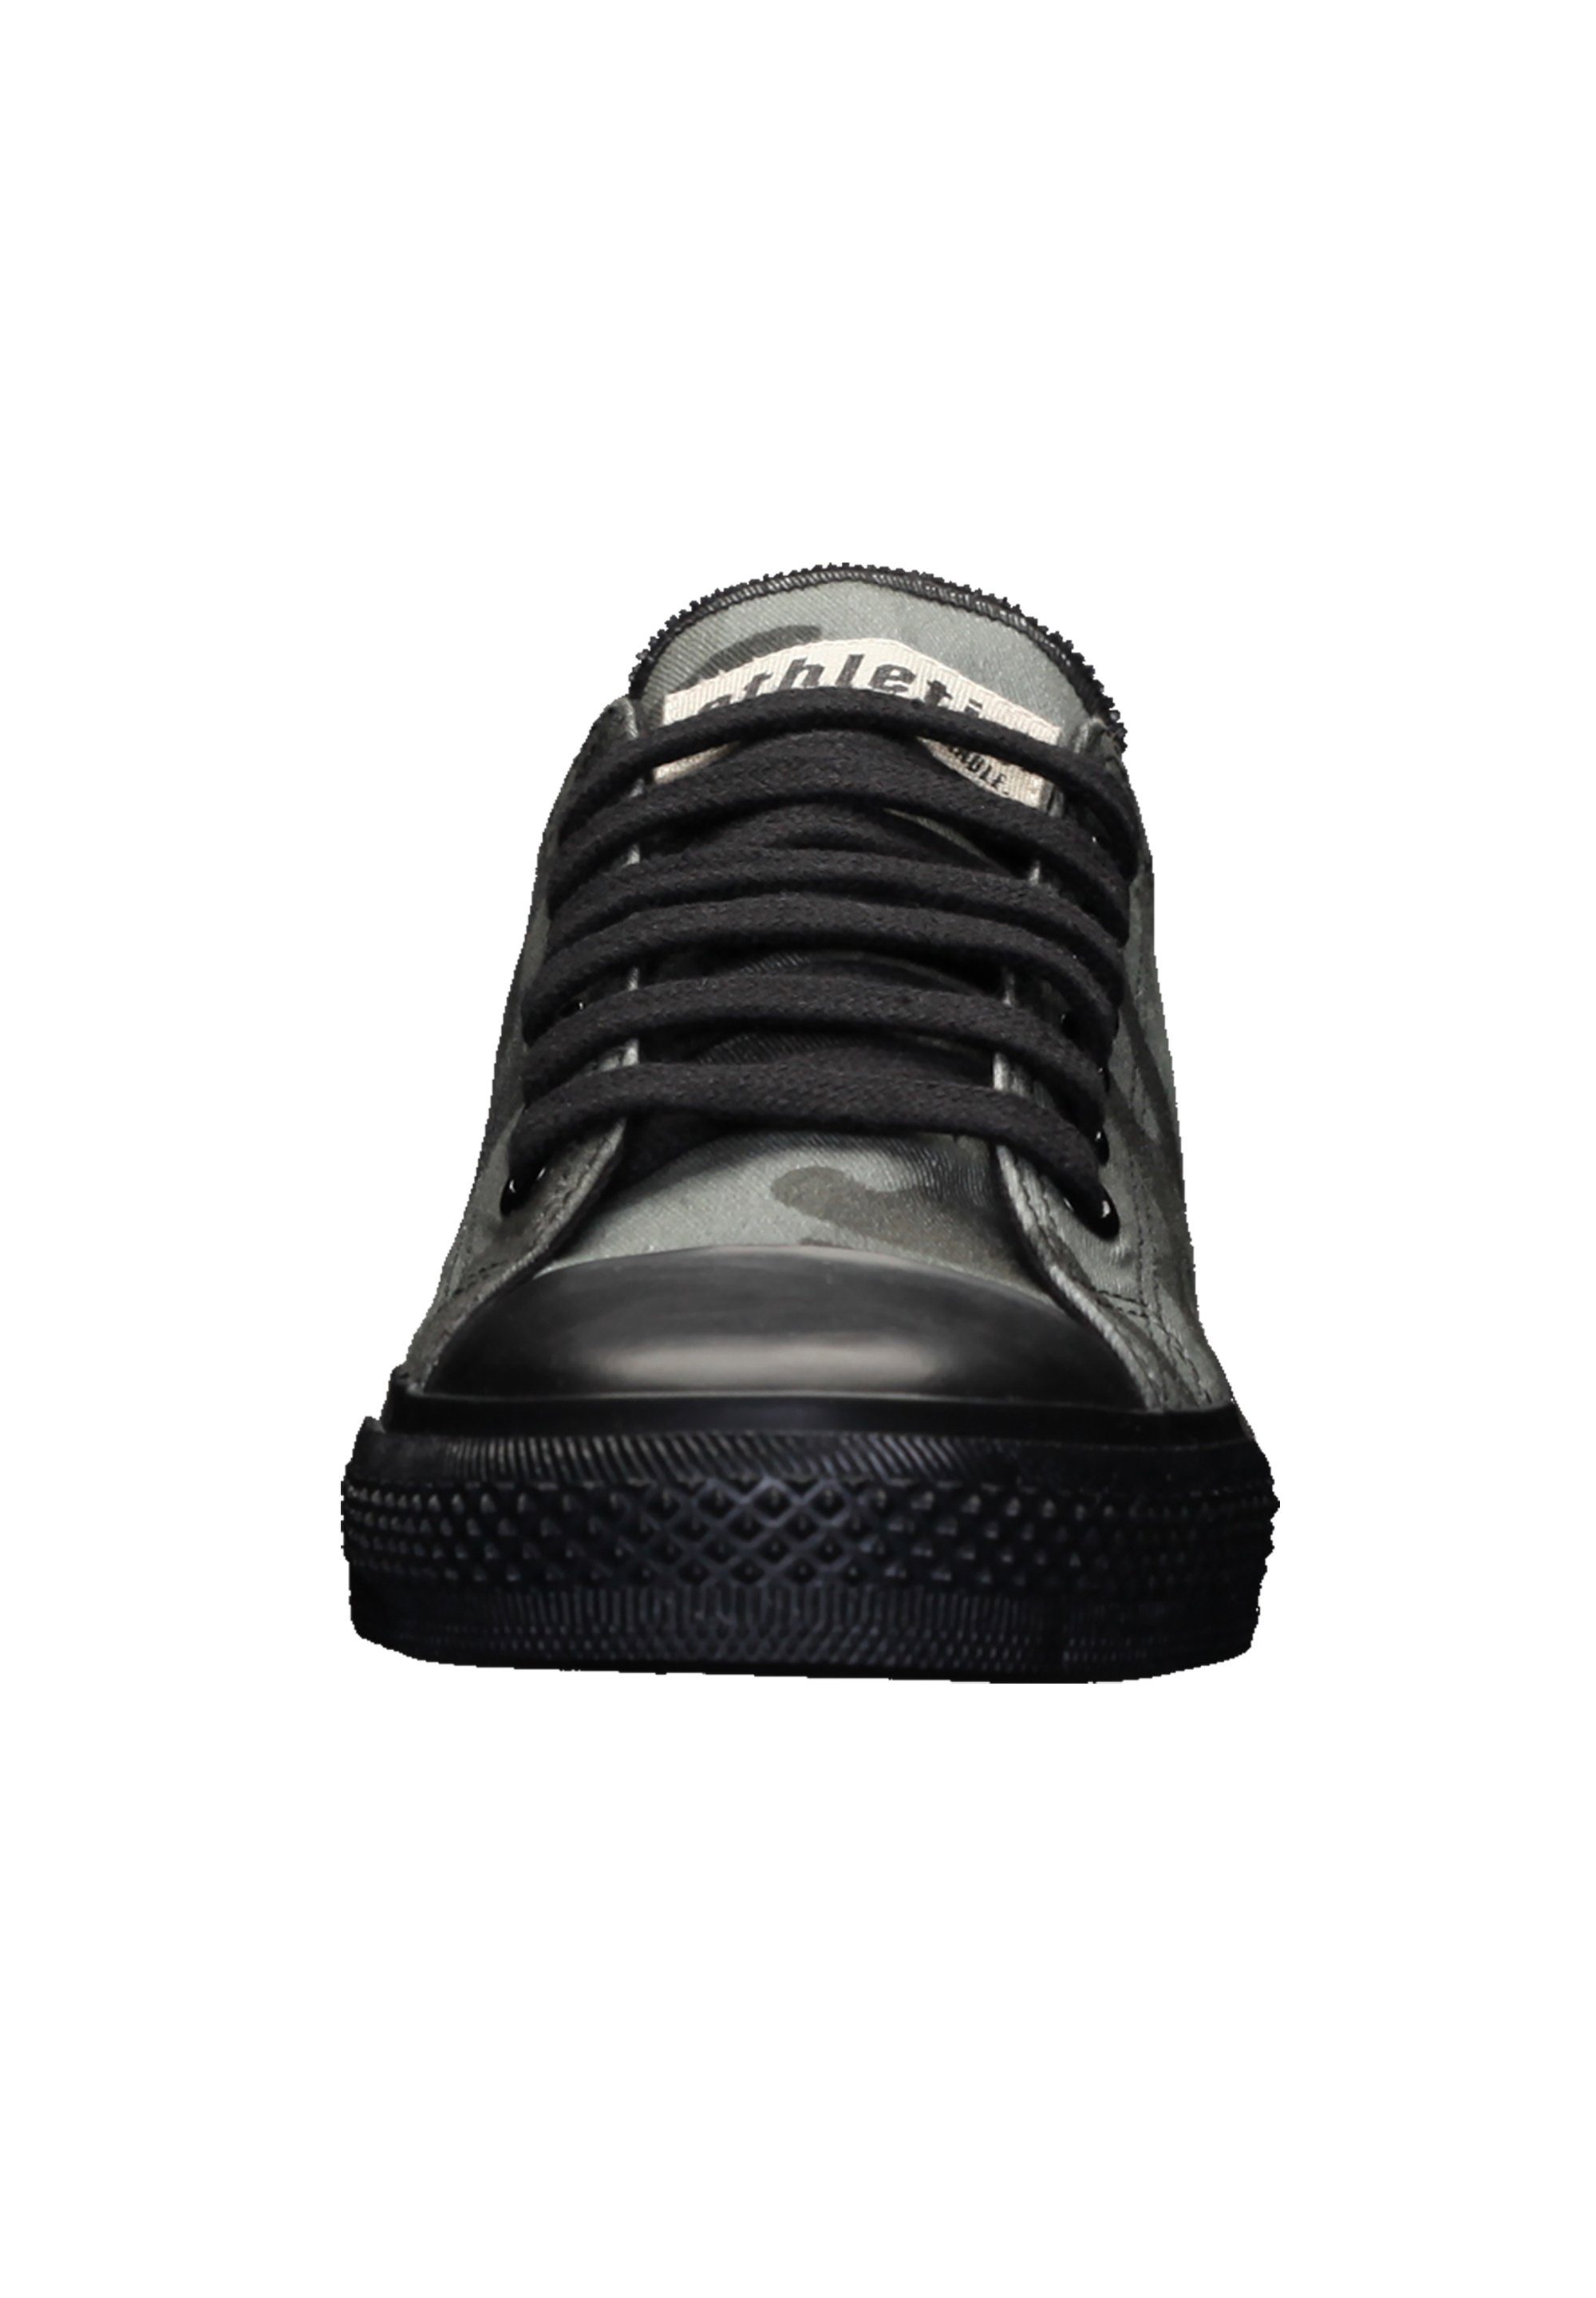 ETHLETIC Black Produkt olive Lo black Cap - jet Fairtrade rights human Cut Sneaker